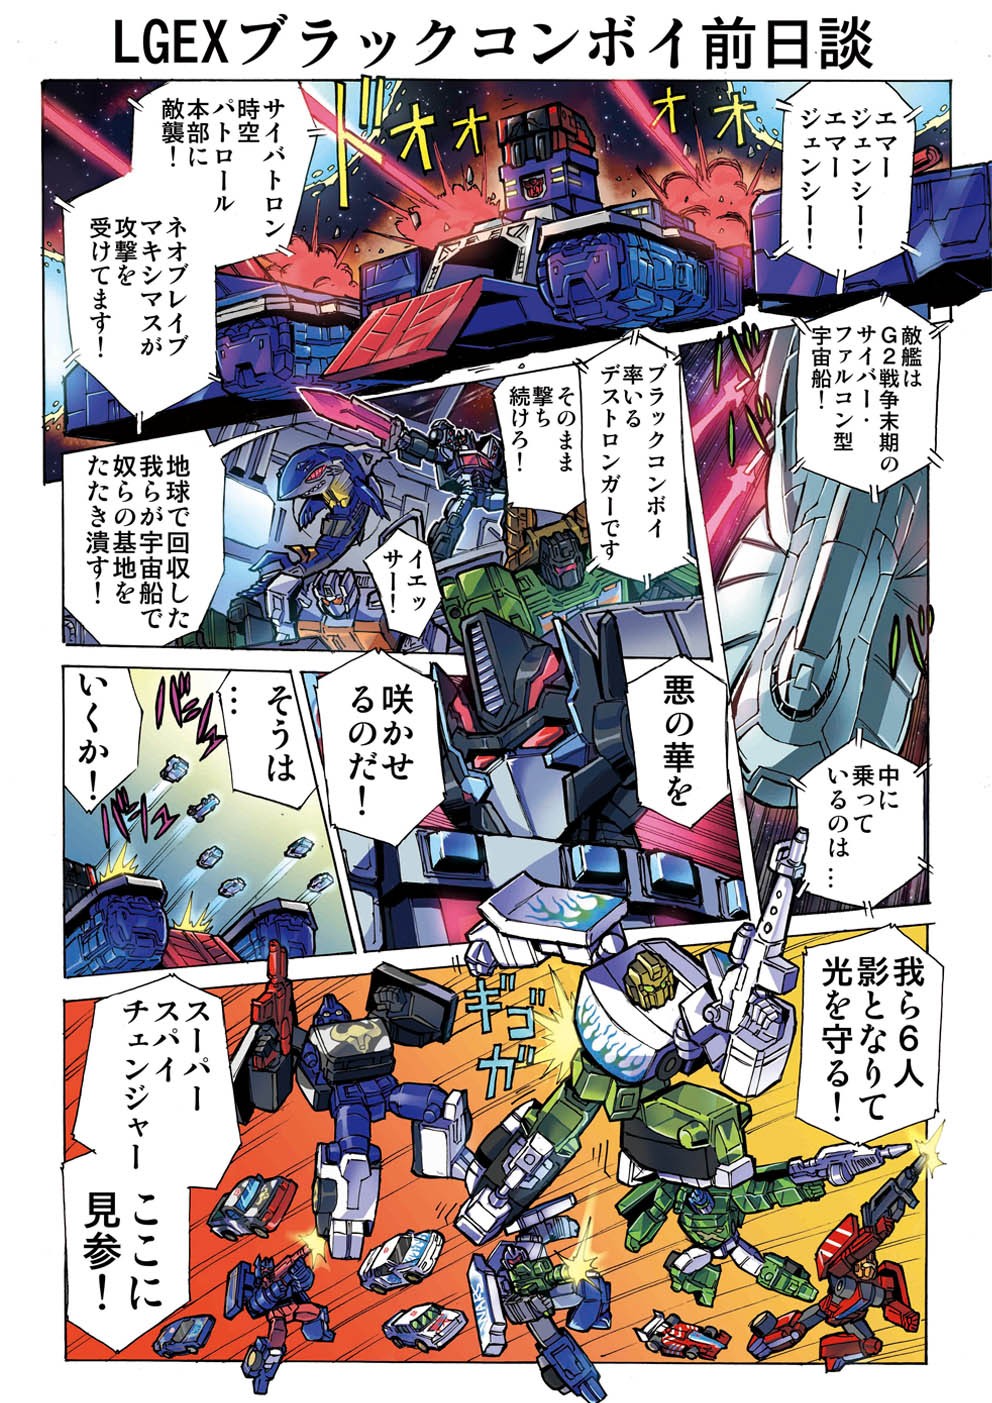 Transformers News: Preview for Upcoming Takara Legends Black Convoy Comic Revealed